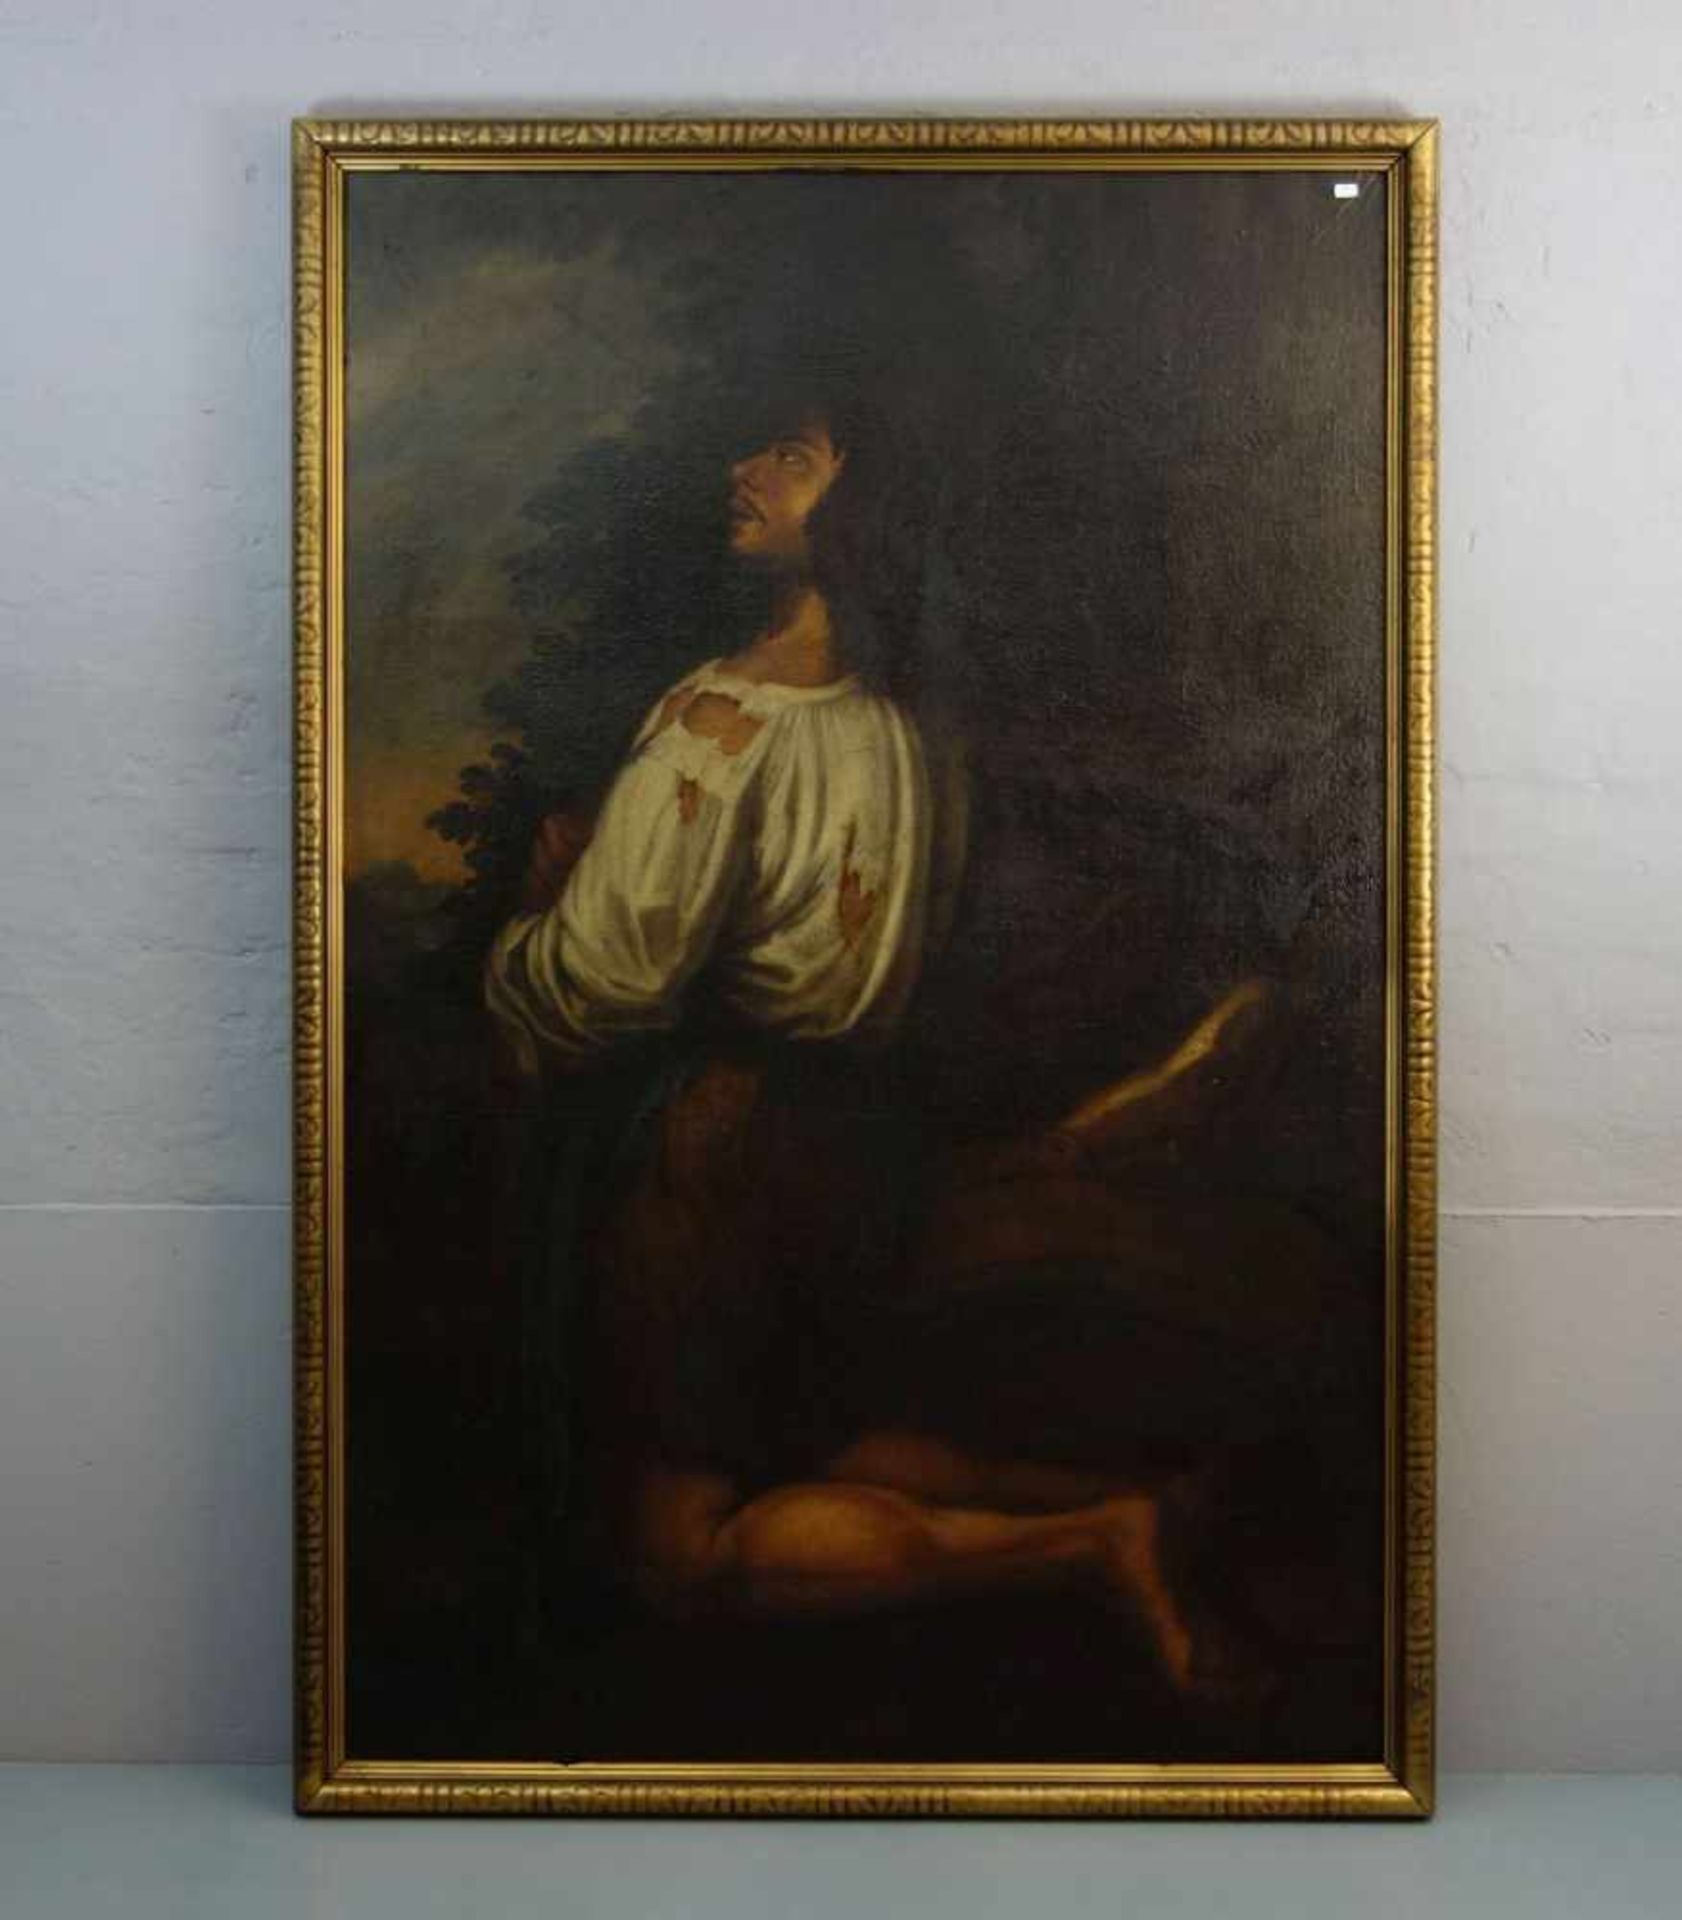 BAROCKGEMÄLDE: "Der verlorene Sohn", Südeuropa, wohl Italien, um 1680 /1700, Öl auf Leinwand / oil